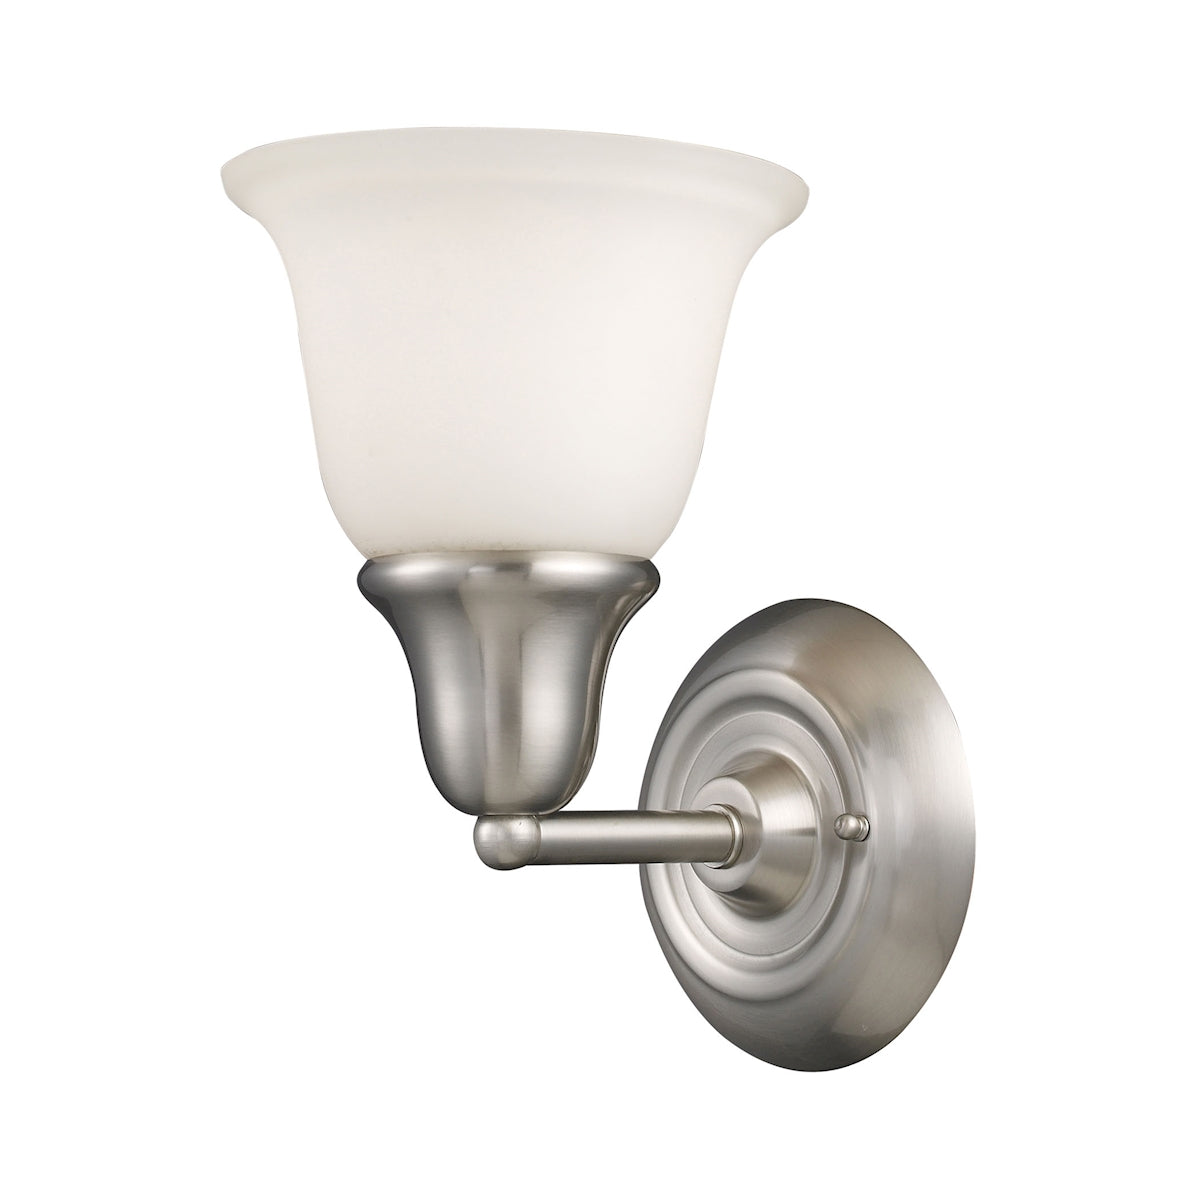 ELK Lighting 67020-1 Berwick 1-Light Vanity Lamp in Brushed Nickel with White Glass